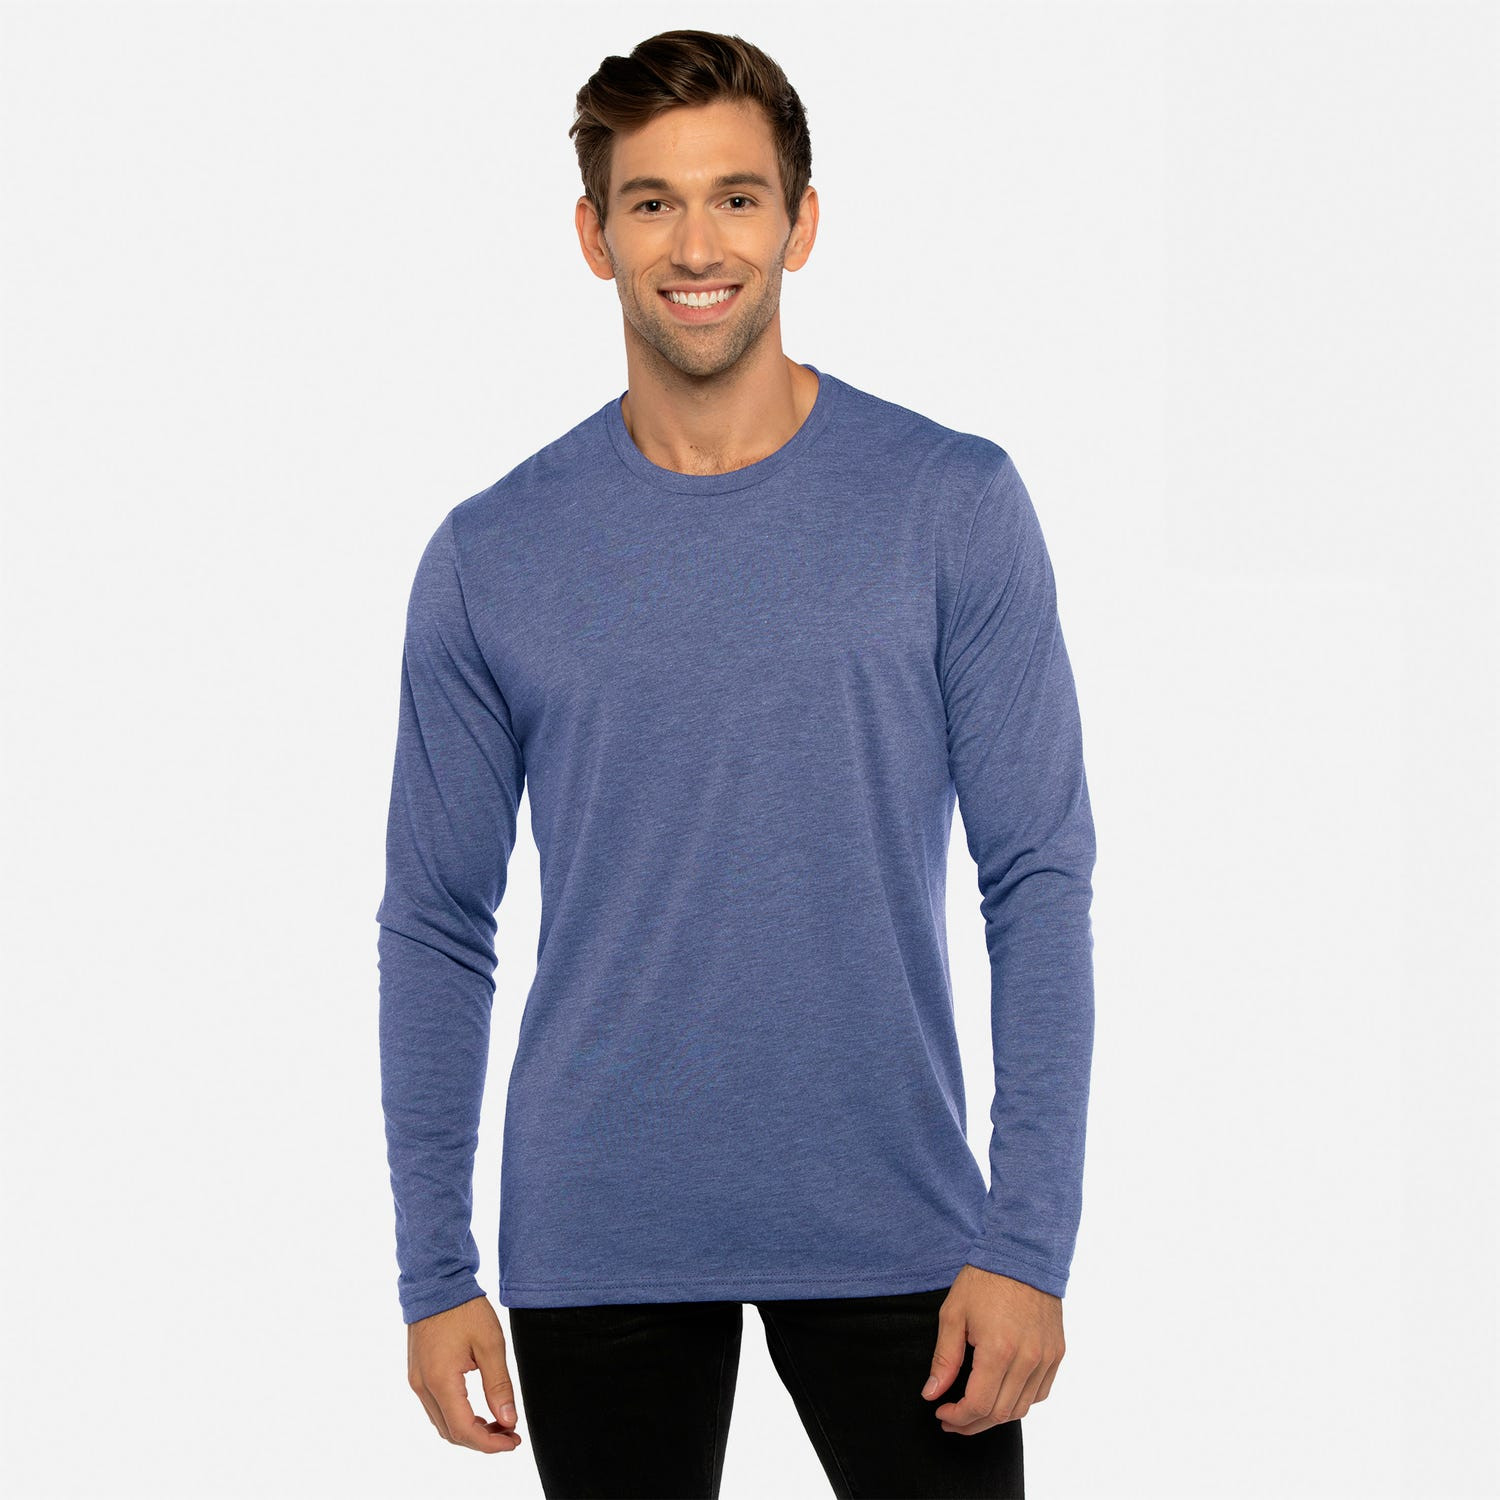 Basic T-shirt with long sleeves - T-shirts - CLOTHING - Man